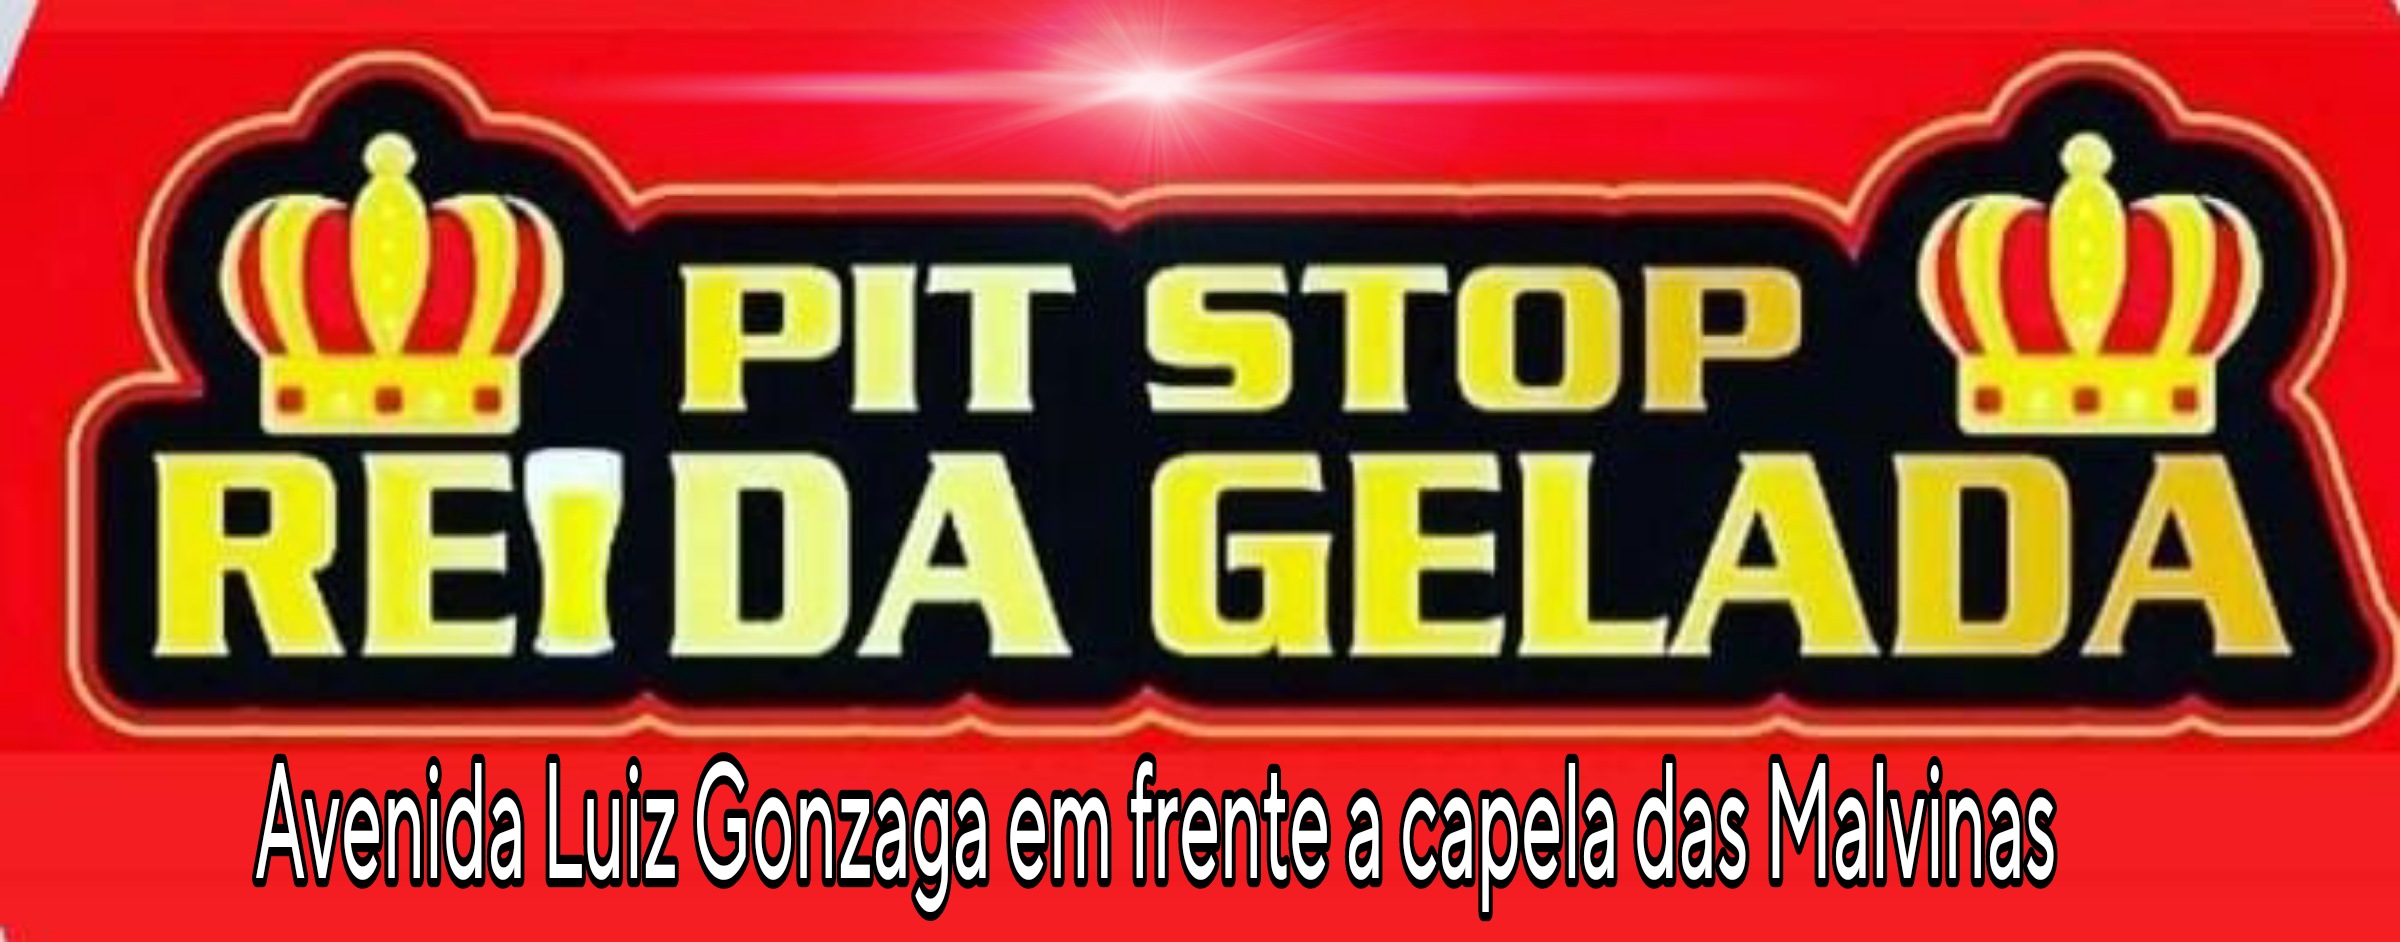 PIT STOP REI DA GELADA